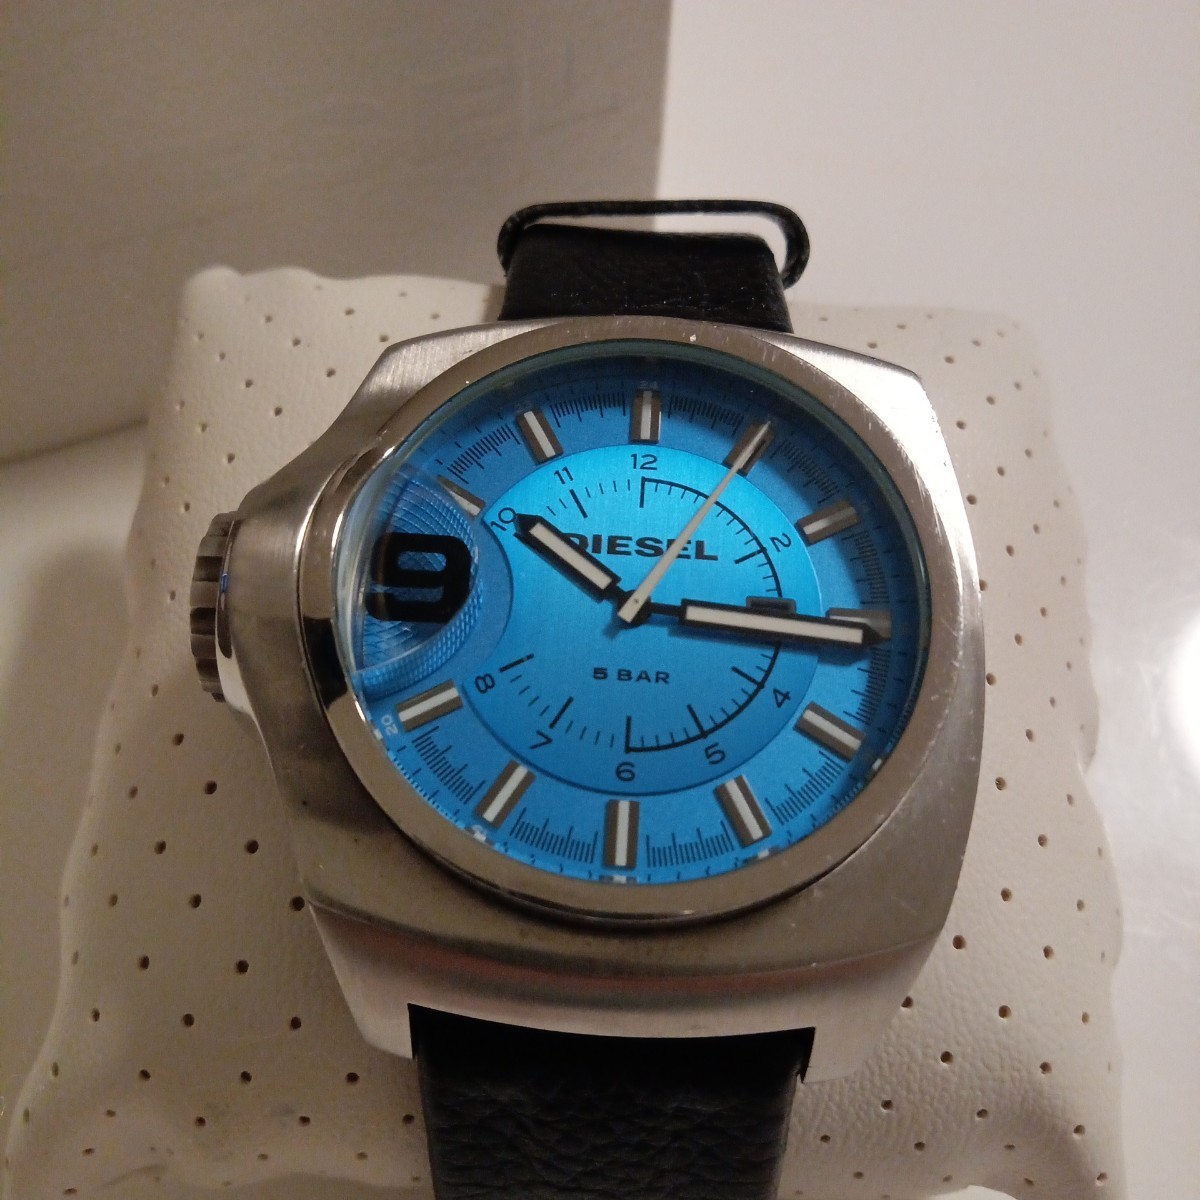 DIESEL ディーゼル メンズ DZ1235 腕時計 ウォッチ Analog アナログ レザー DZ1235 メンズ 時計 シチズン ブルー 青 デザイン 外箱付き_画像2